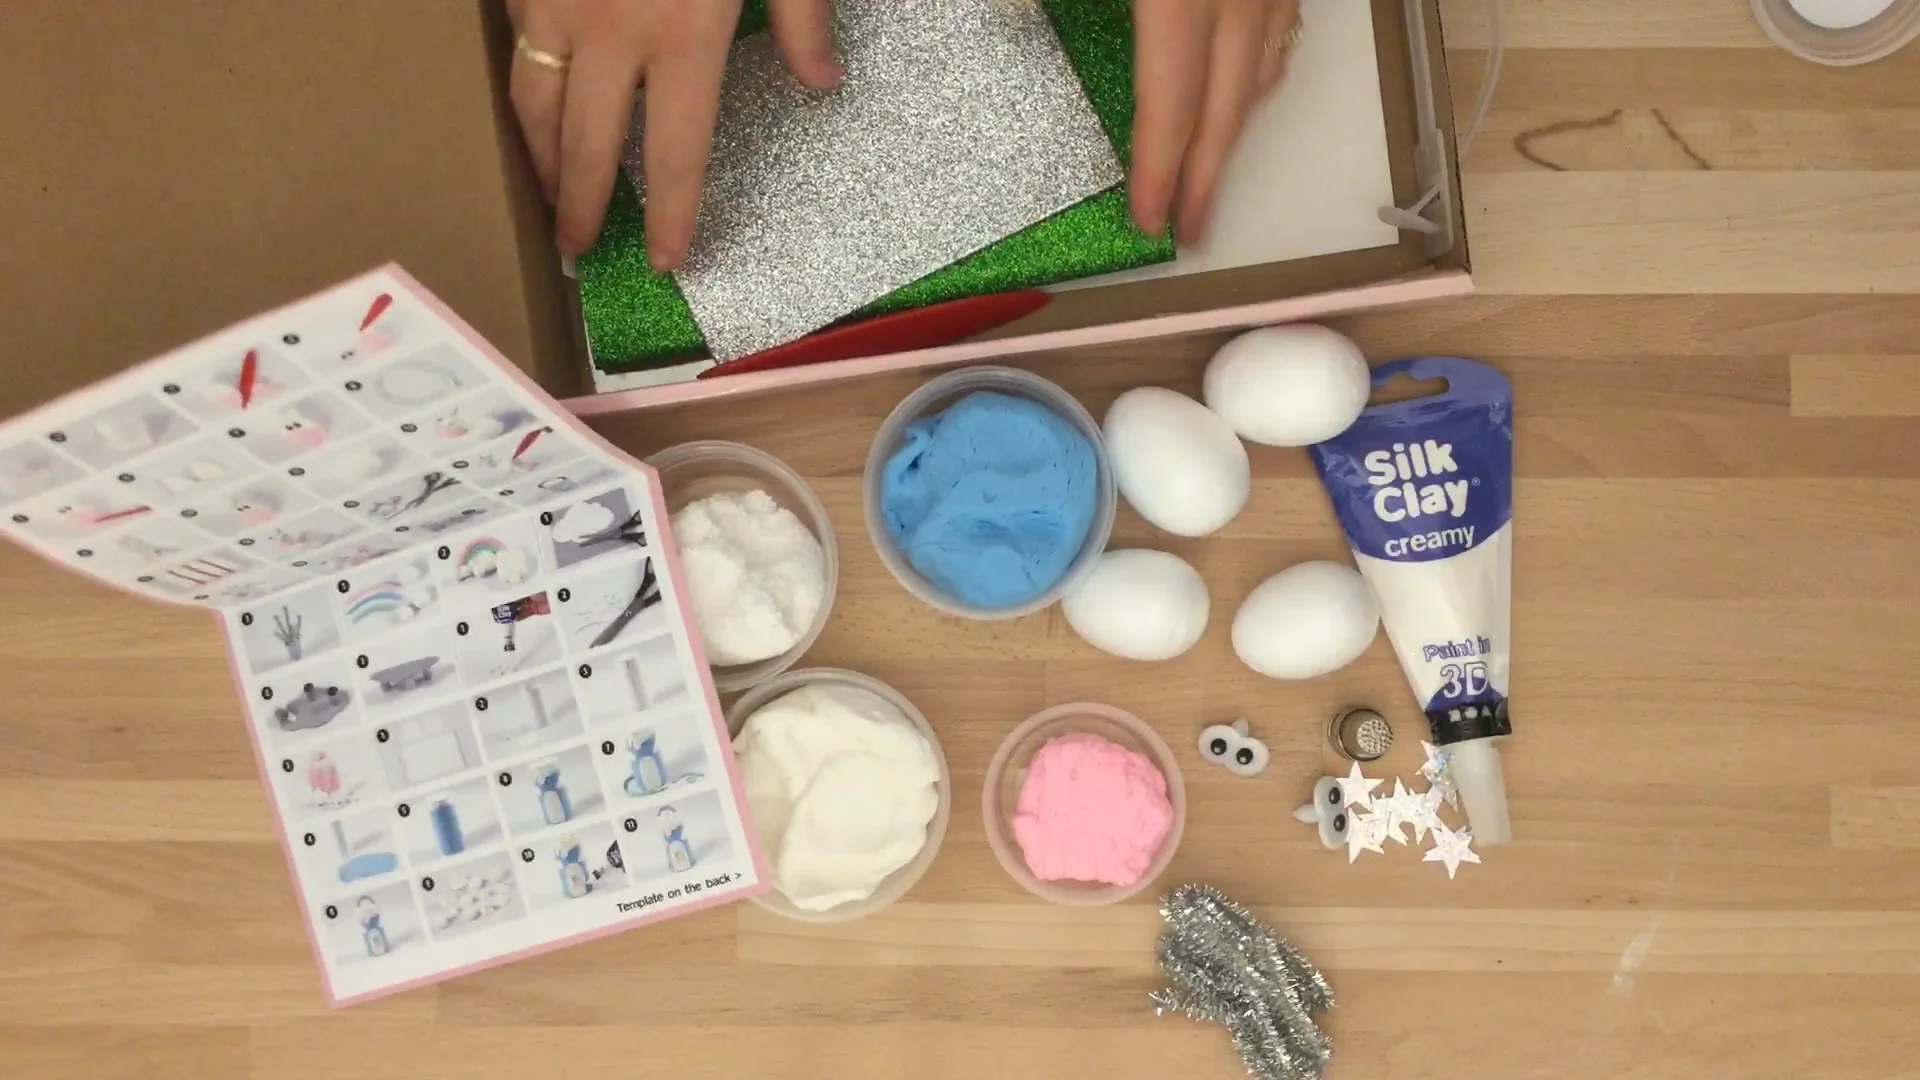 Foam Clay on Vimeo